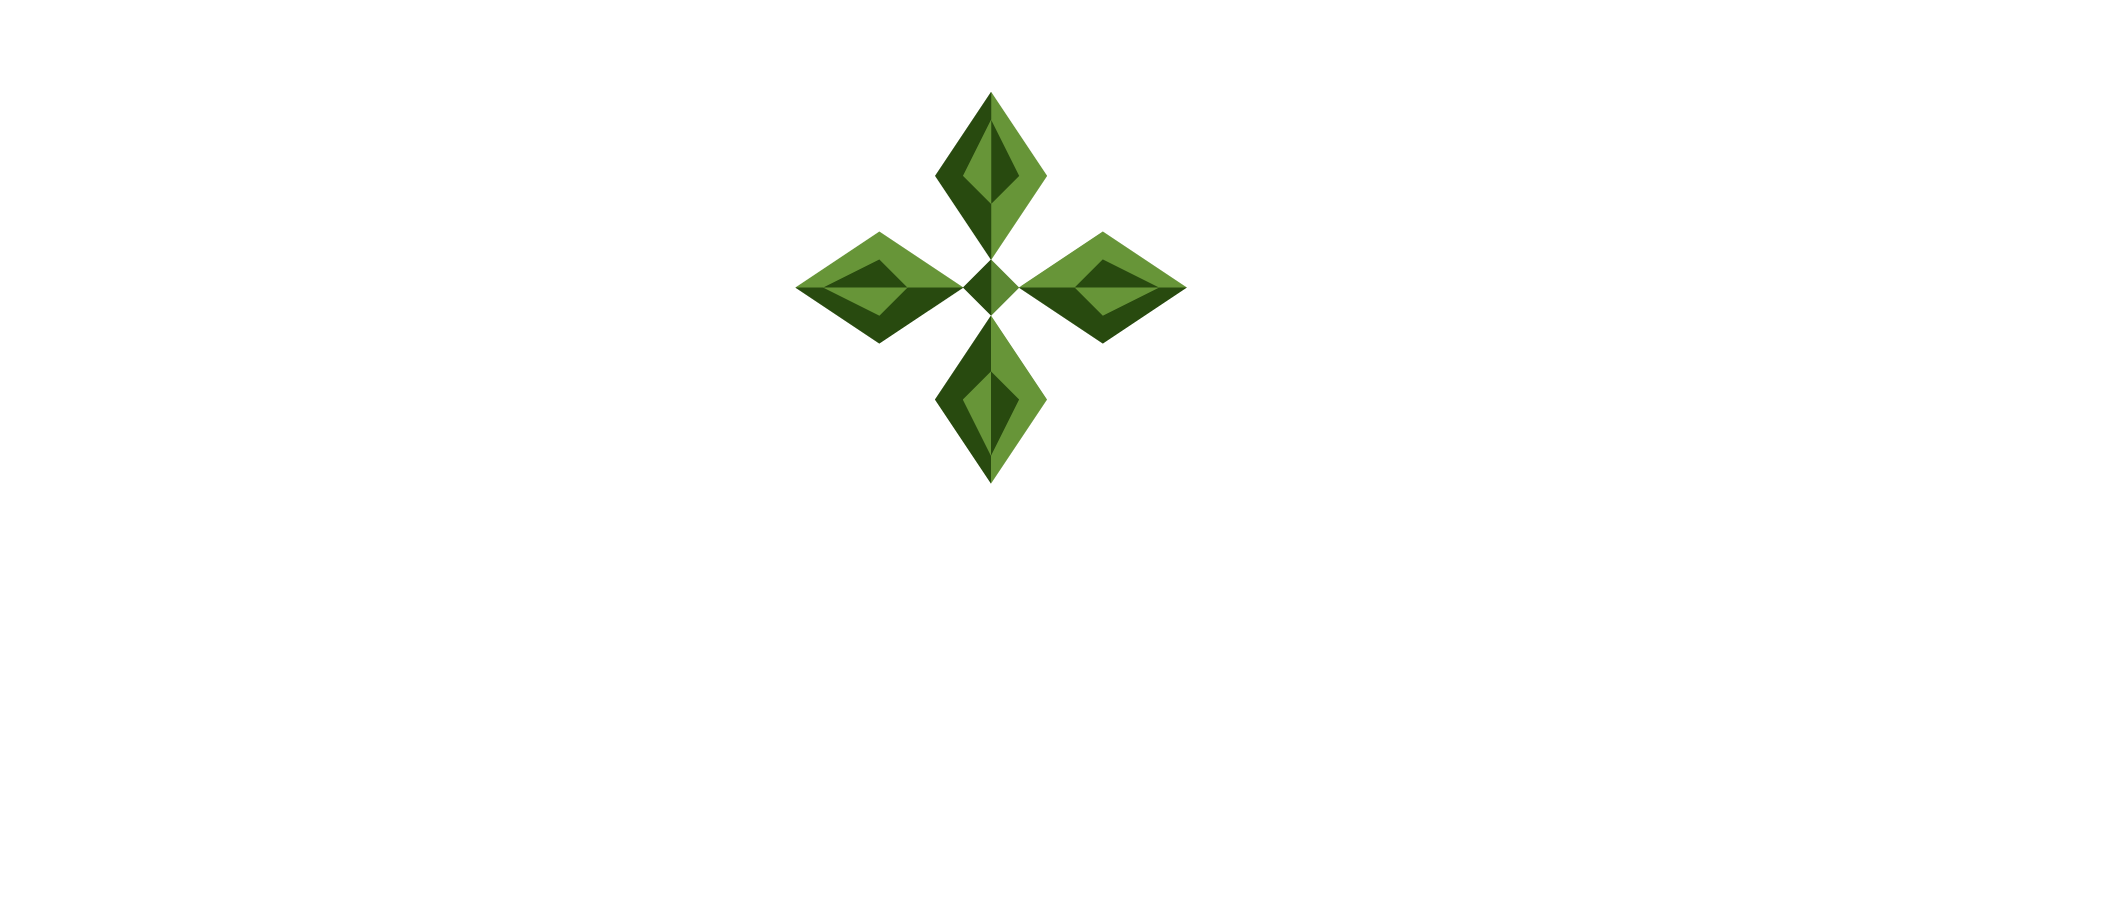 John O’Connor & Associates LLC